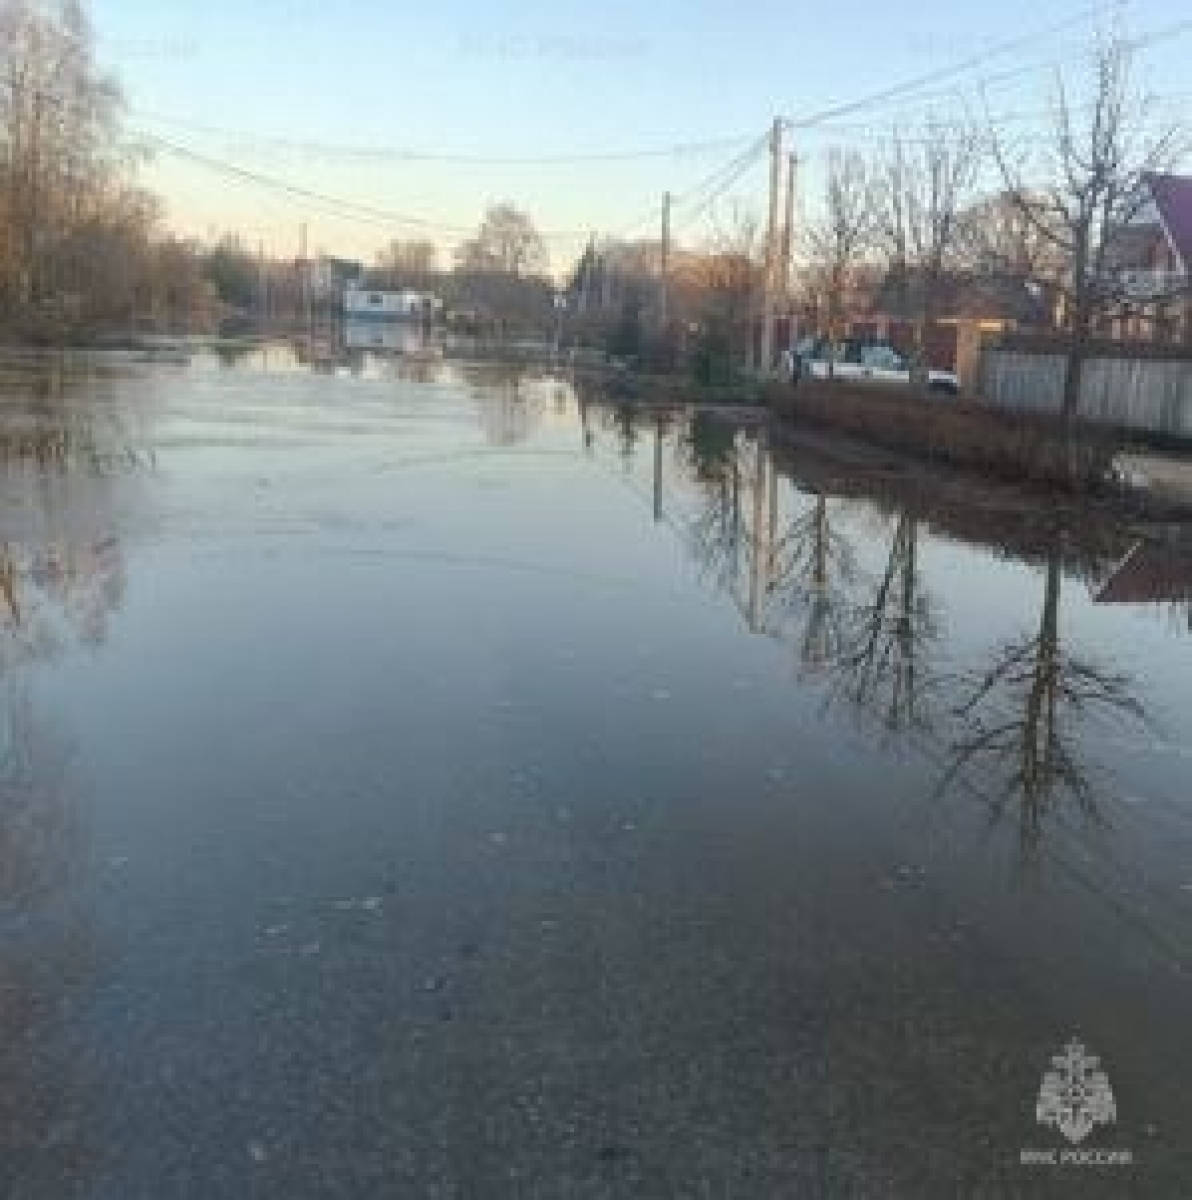 Режим чрезвычайной ситуации введён в Якутии из-за паводка